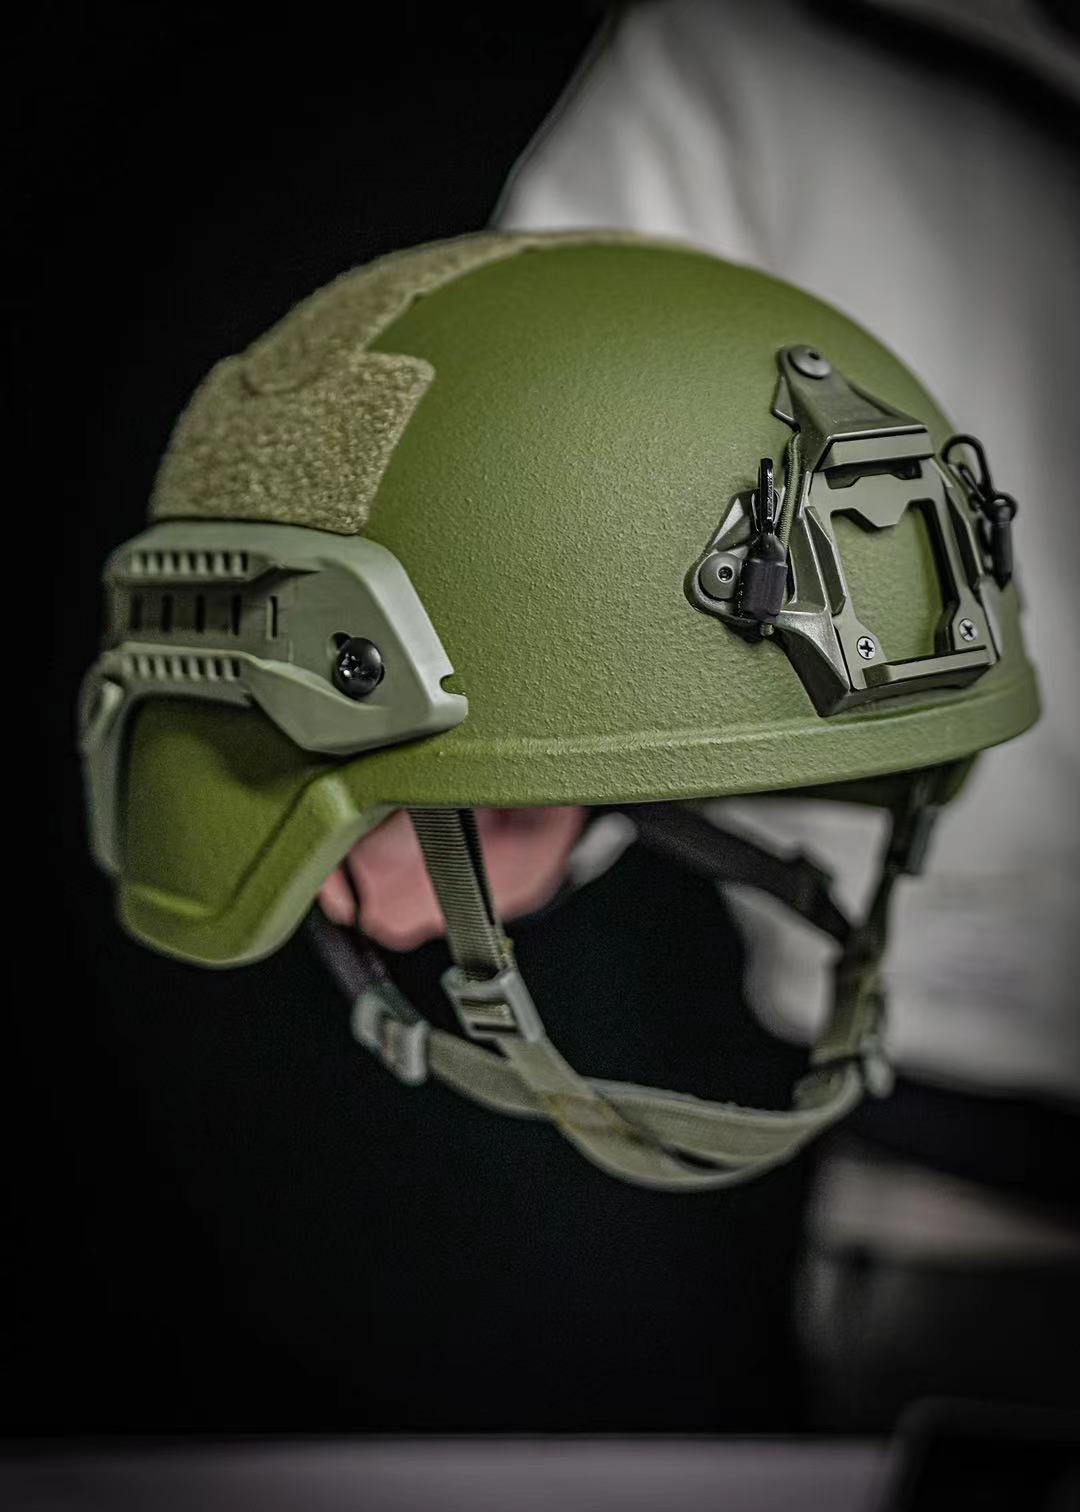 Level 3 MICH Tactical Bulletproof Helmet Manufacturers and Suppliers -  China Factory - SENKEN